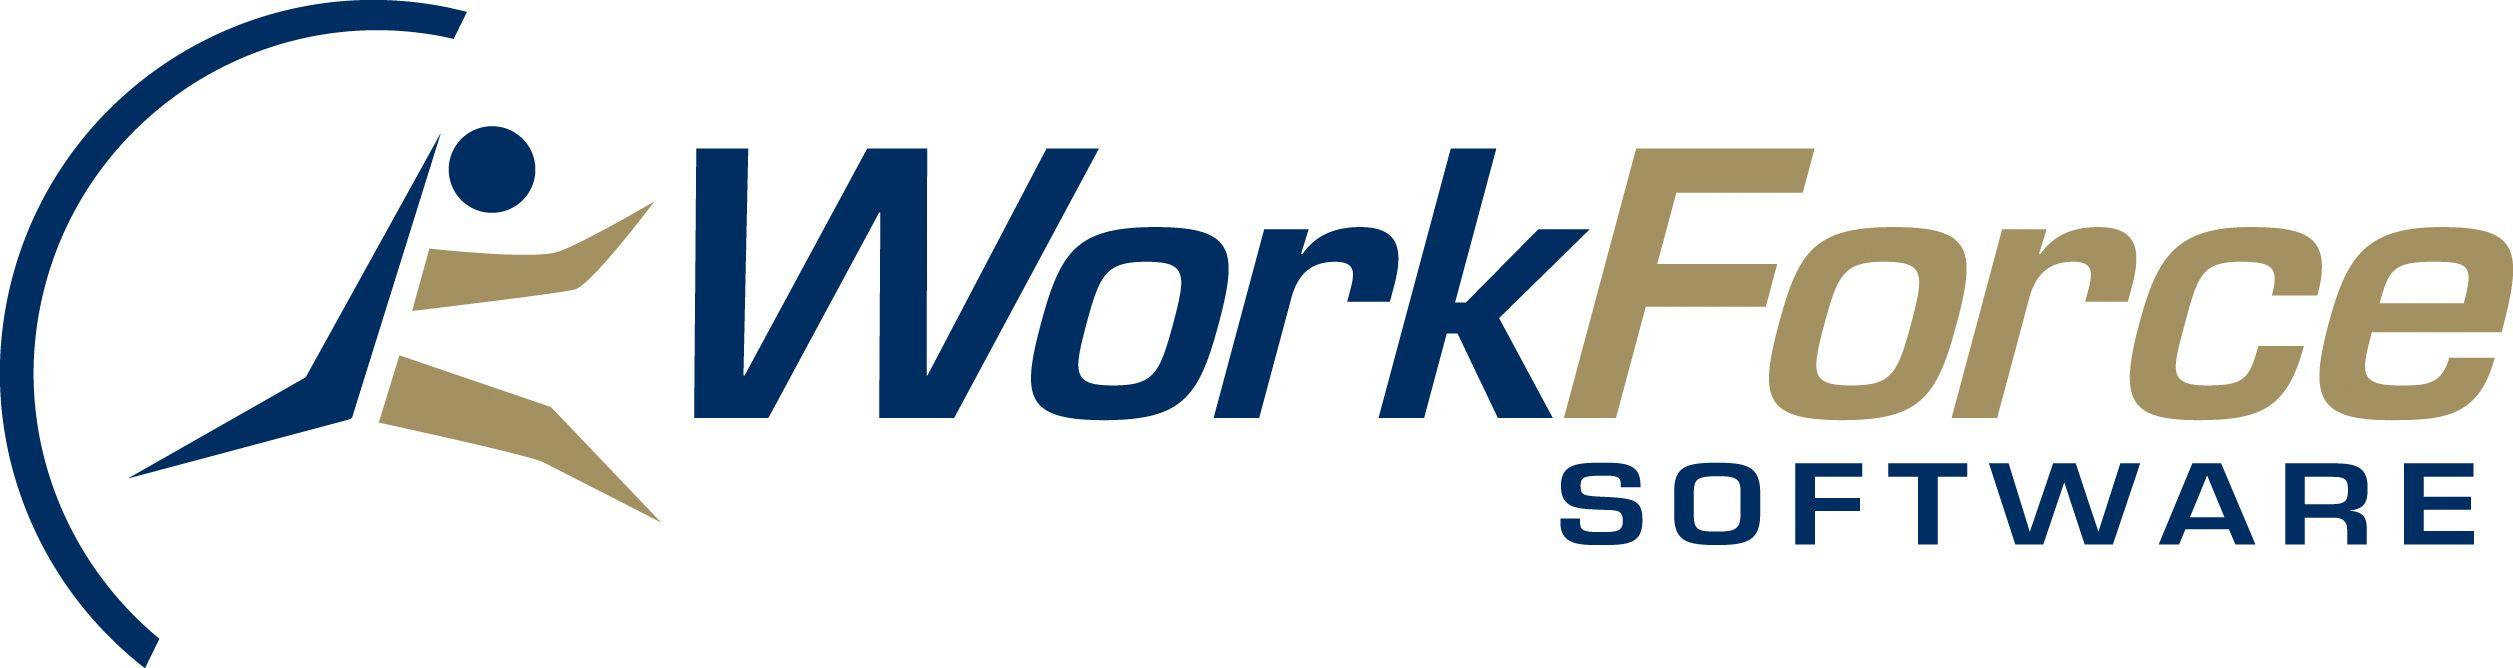 Workforce Logo - WorkForce Software, EPI USE Partnership To Optimize Employers' HR